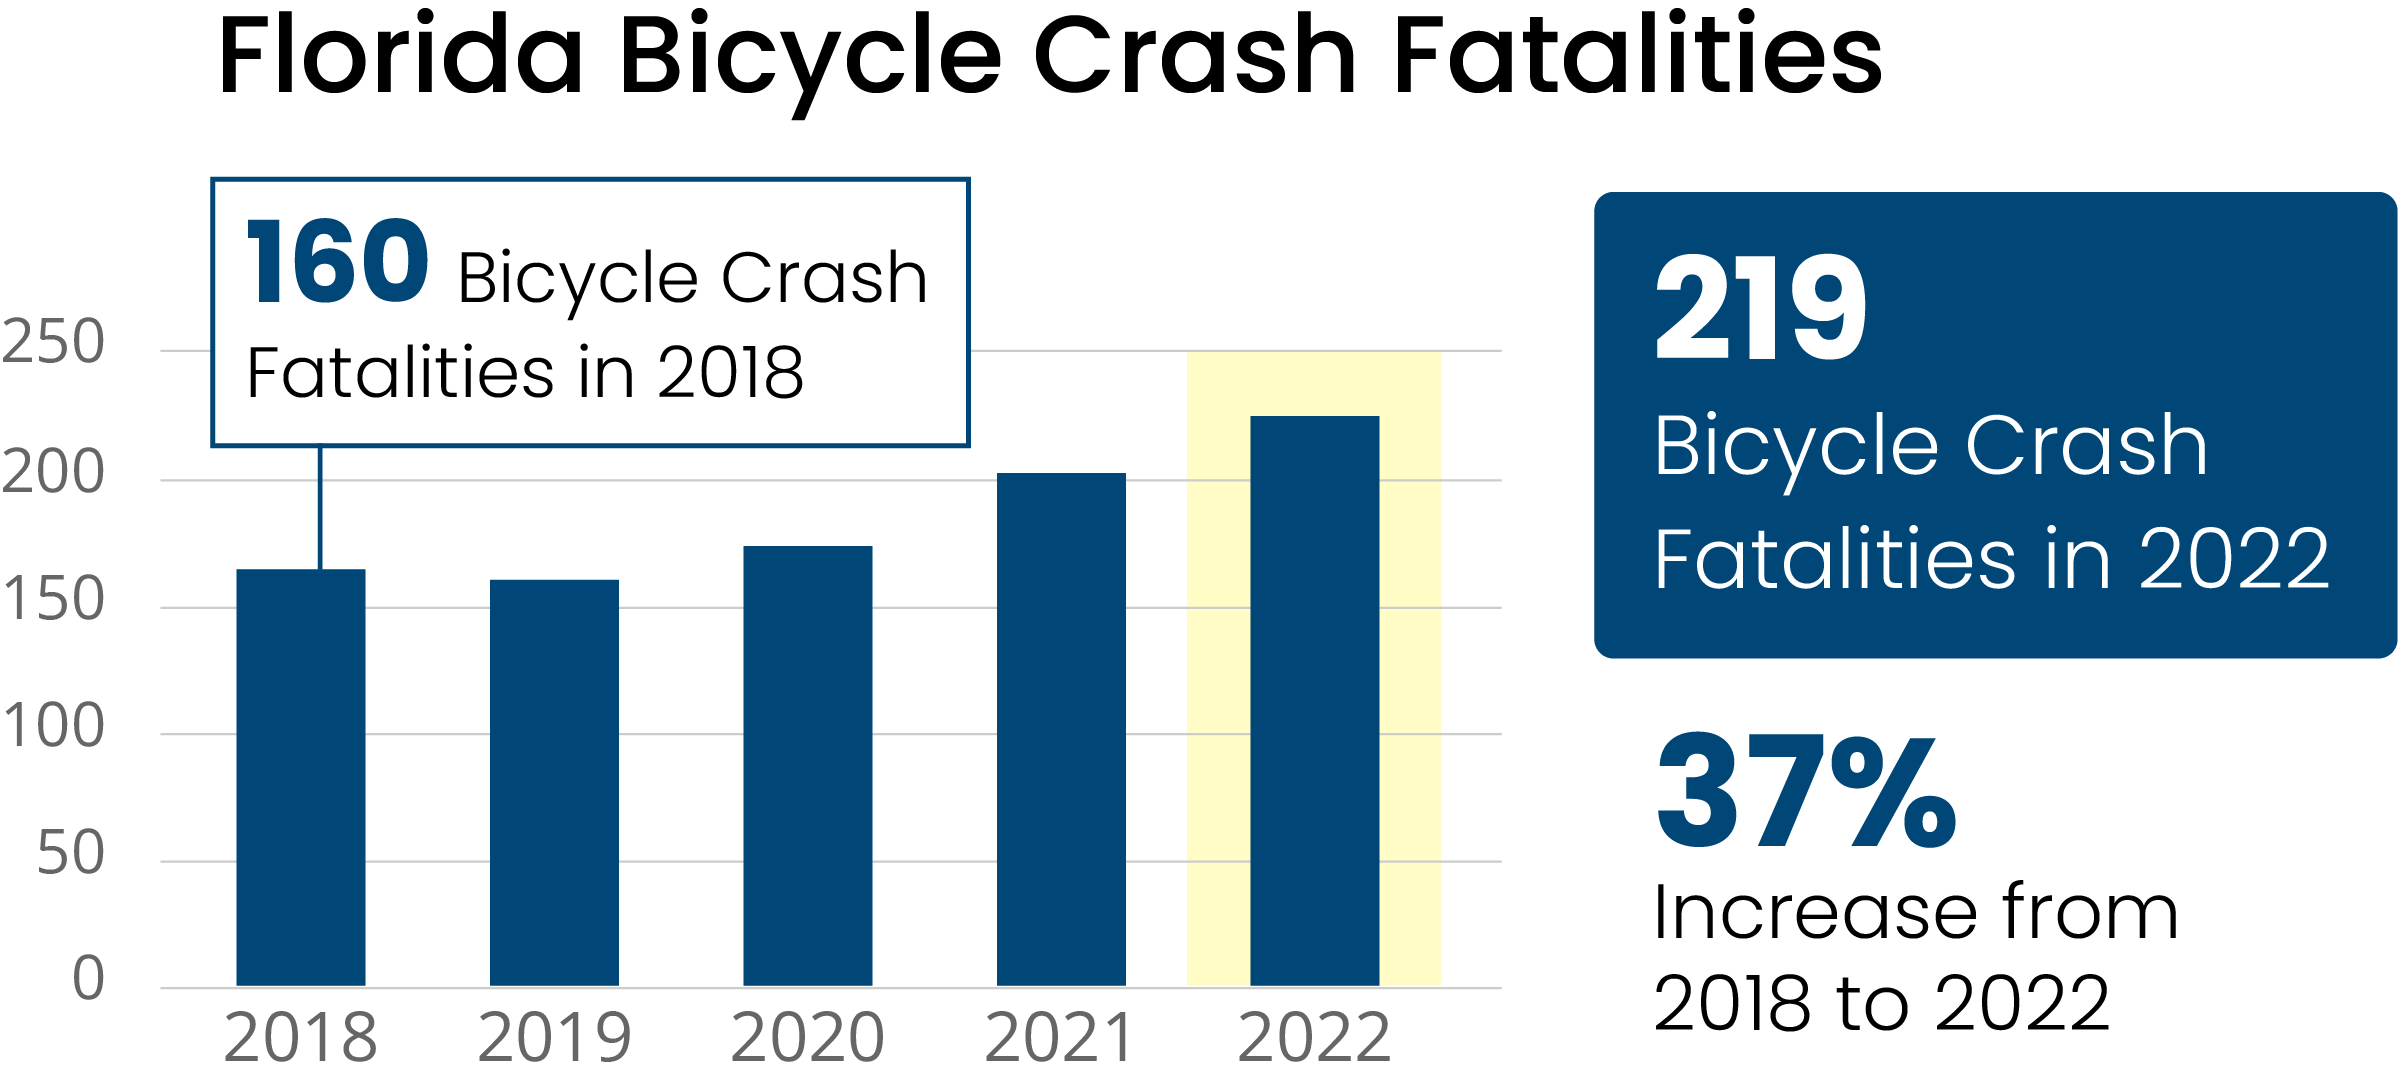 Florida bicycle fatal crash statistics infographic